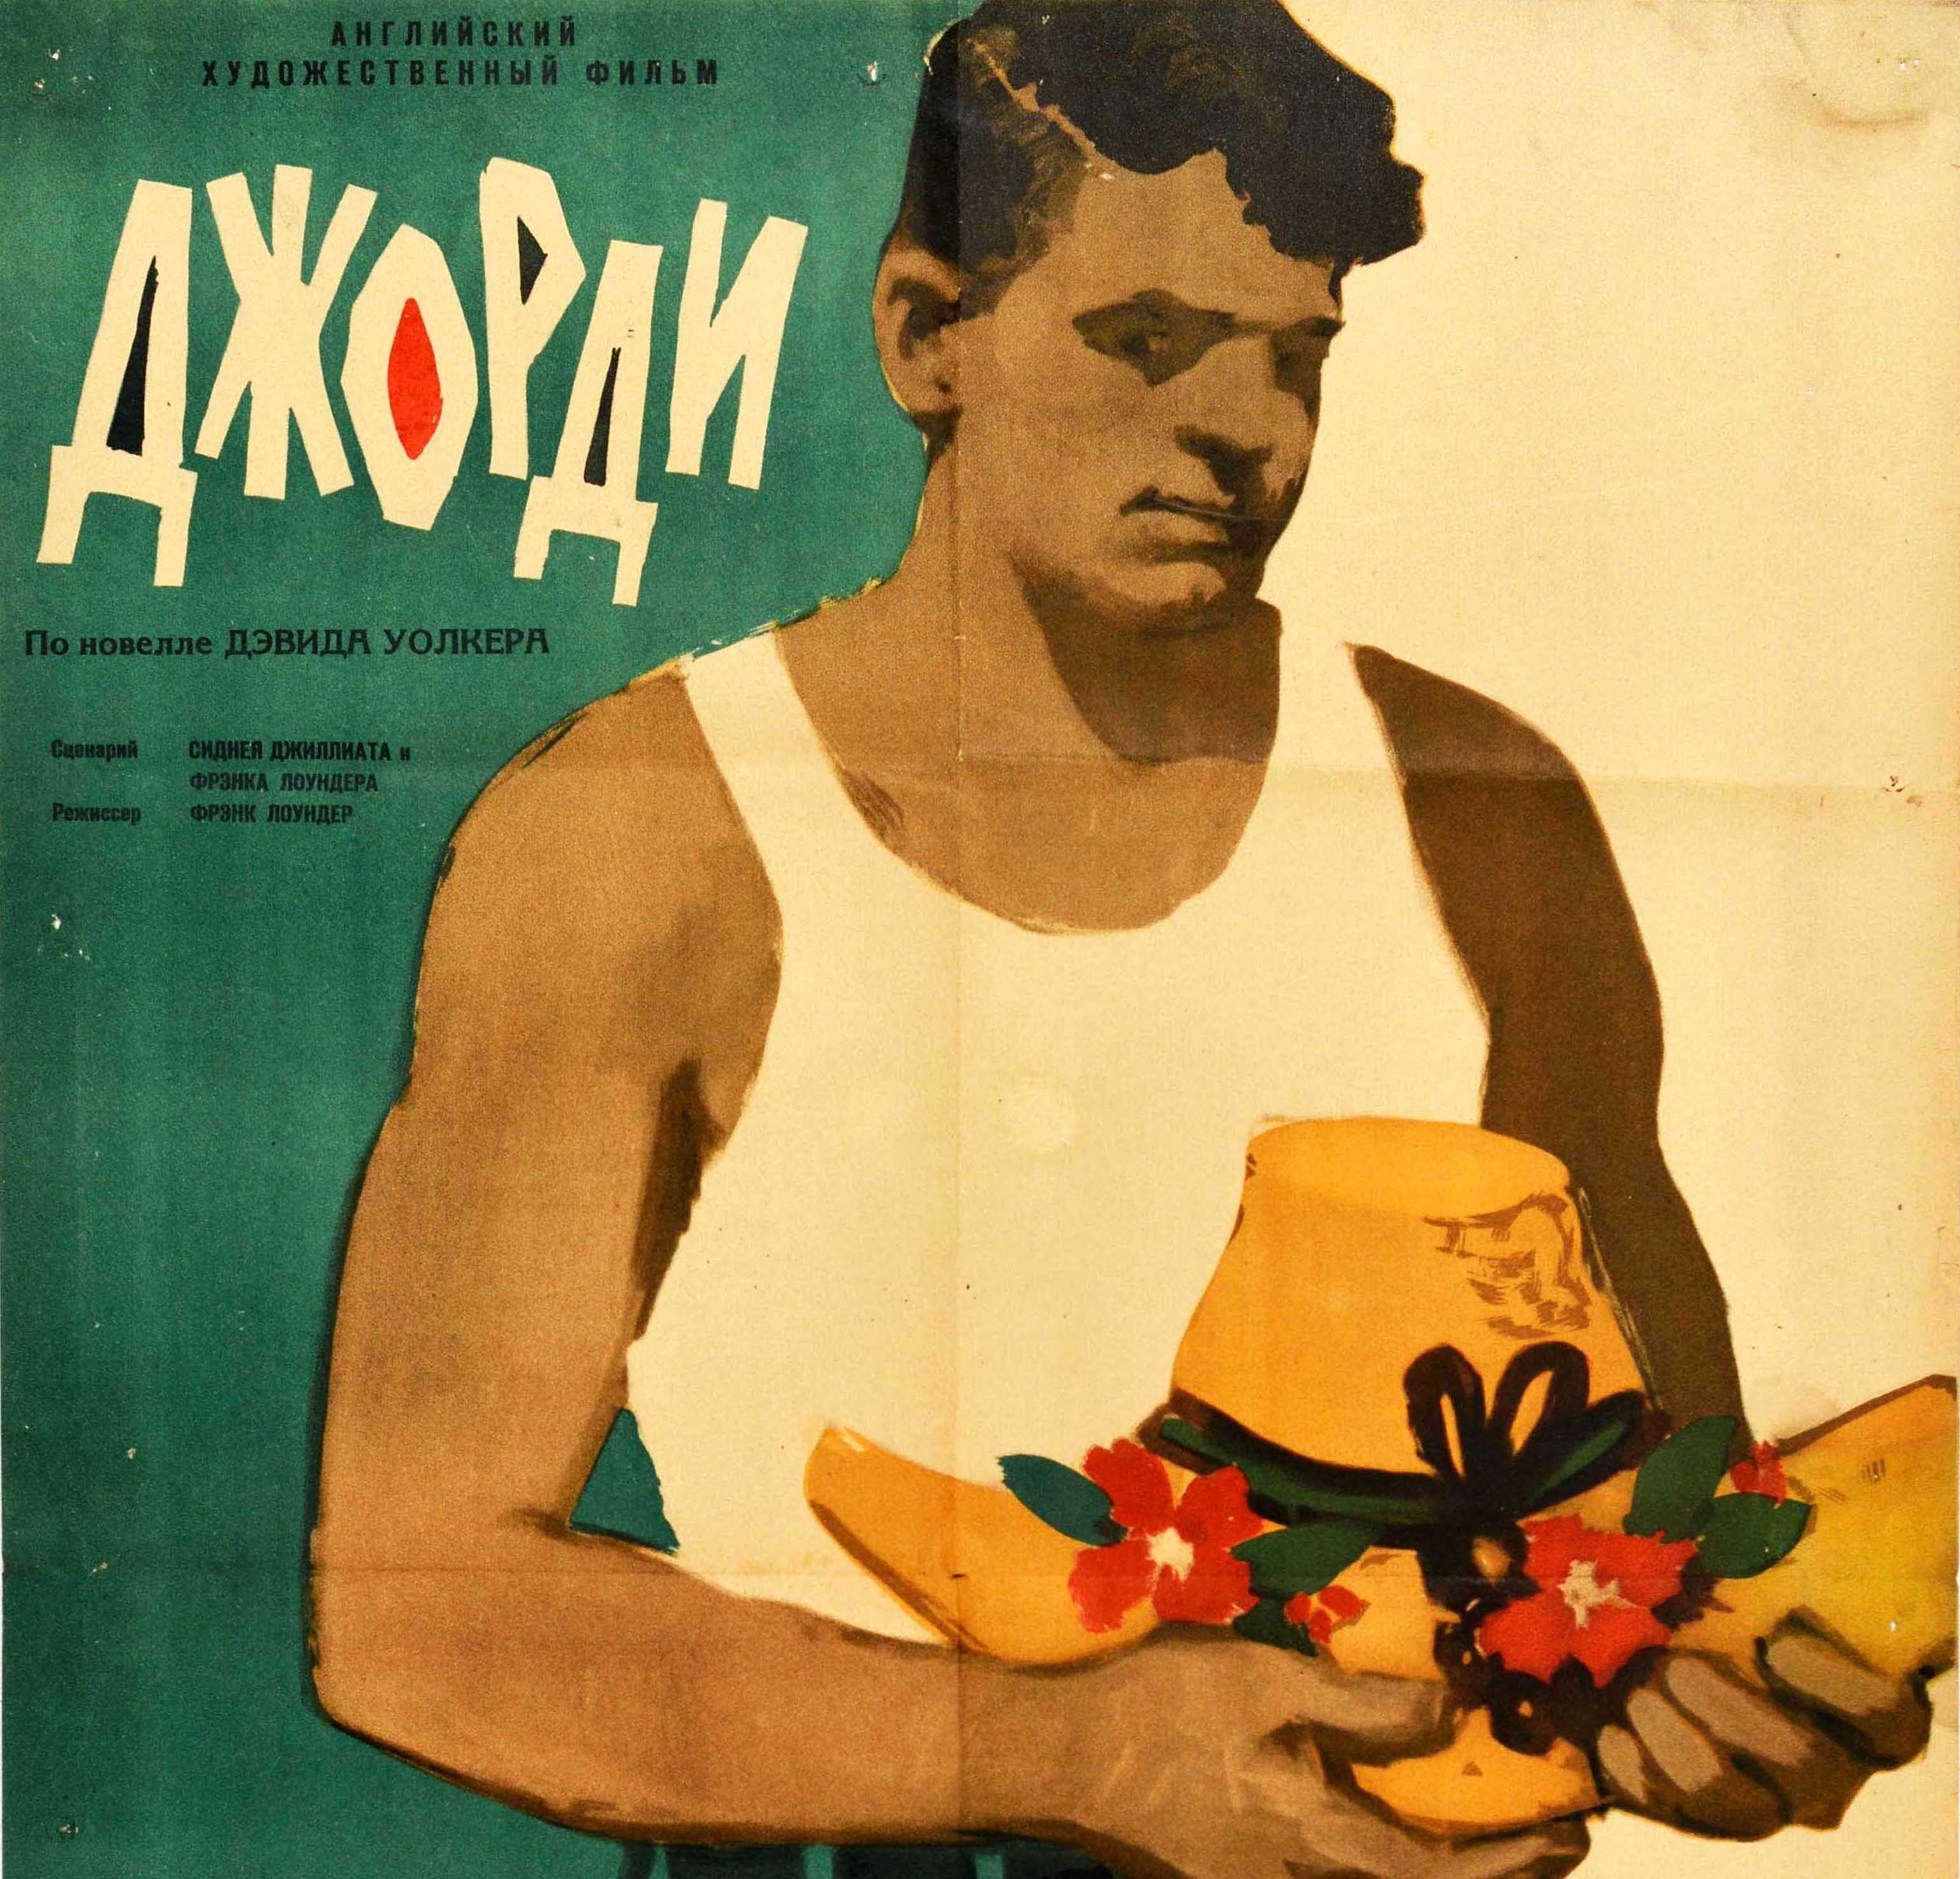 Original Vintage Soviet Film Poster Geordie British Romantic Comedy Movie Drama - Print by M Heifitz